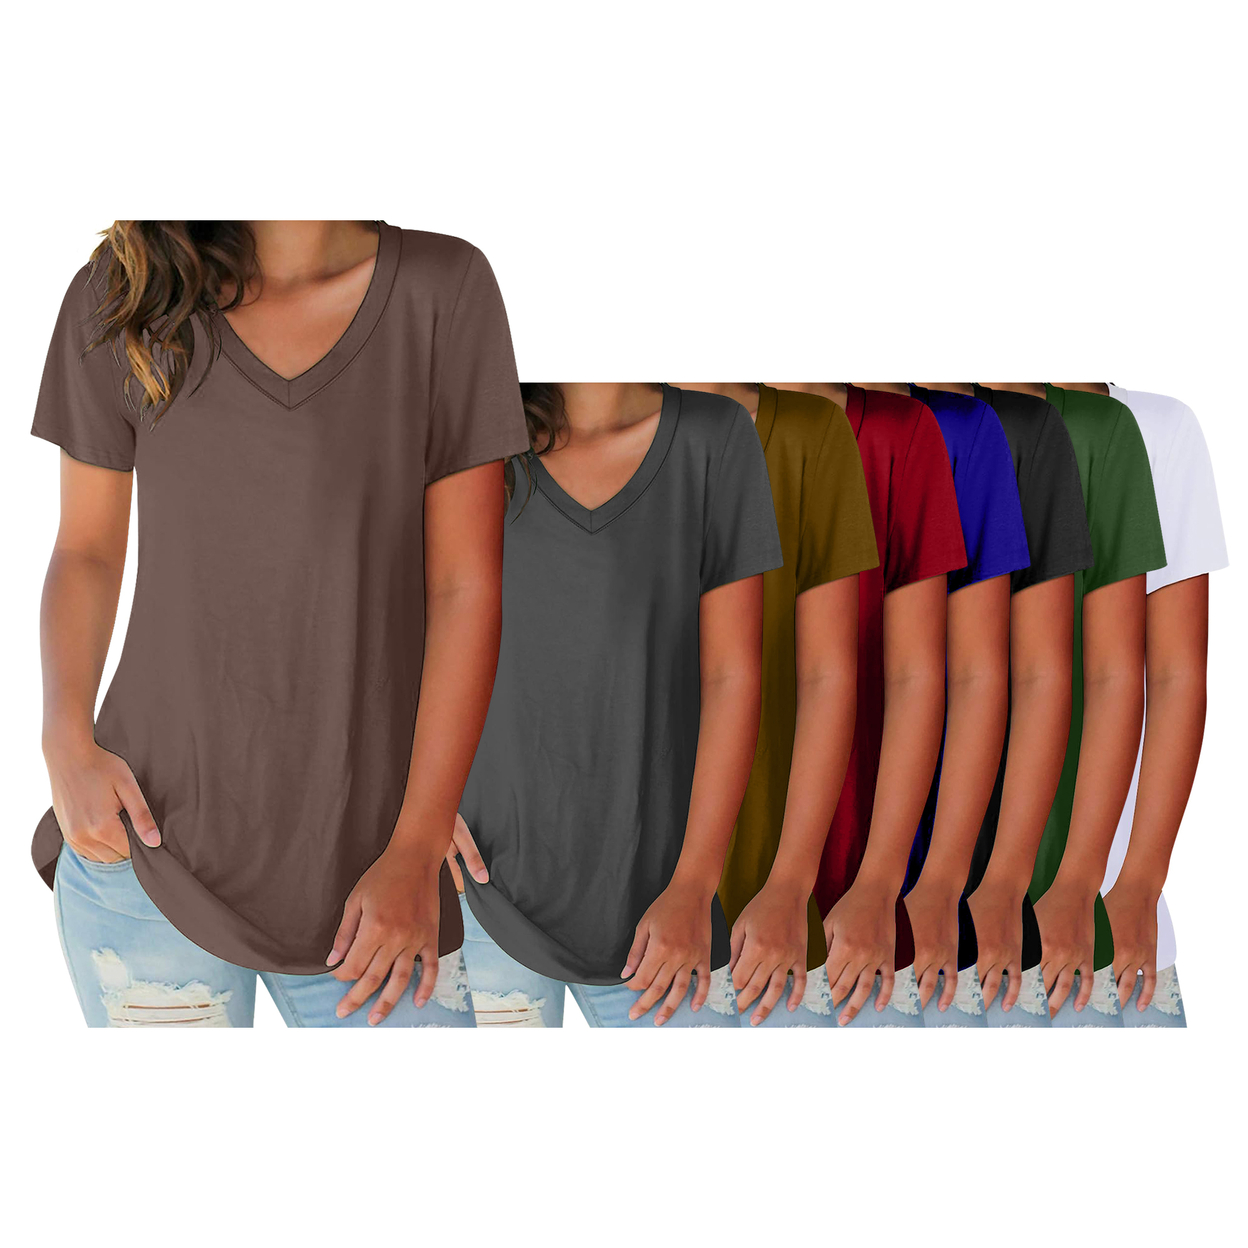 3-Pack: Women's Ultra Soft Smooth Cotton Blend Basic V-Neck Short Sleeve Shirts - Black, Grey, Brown, Medium